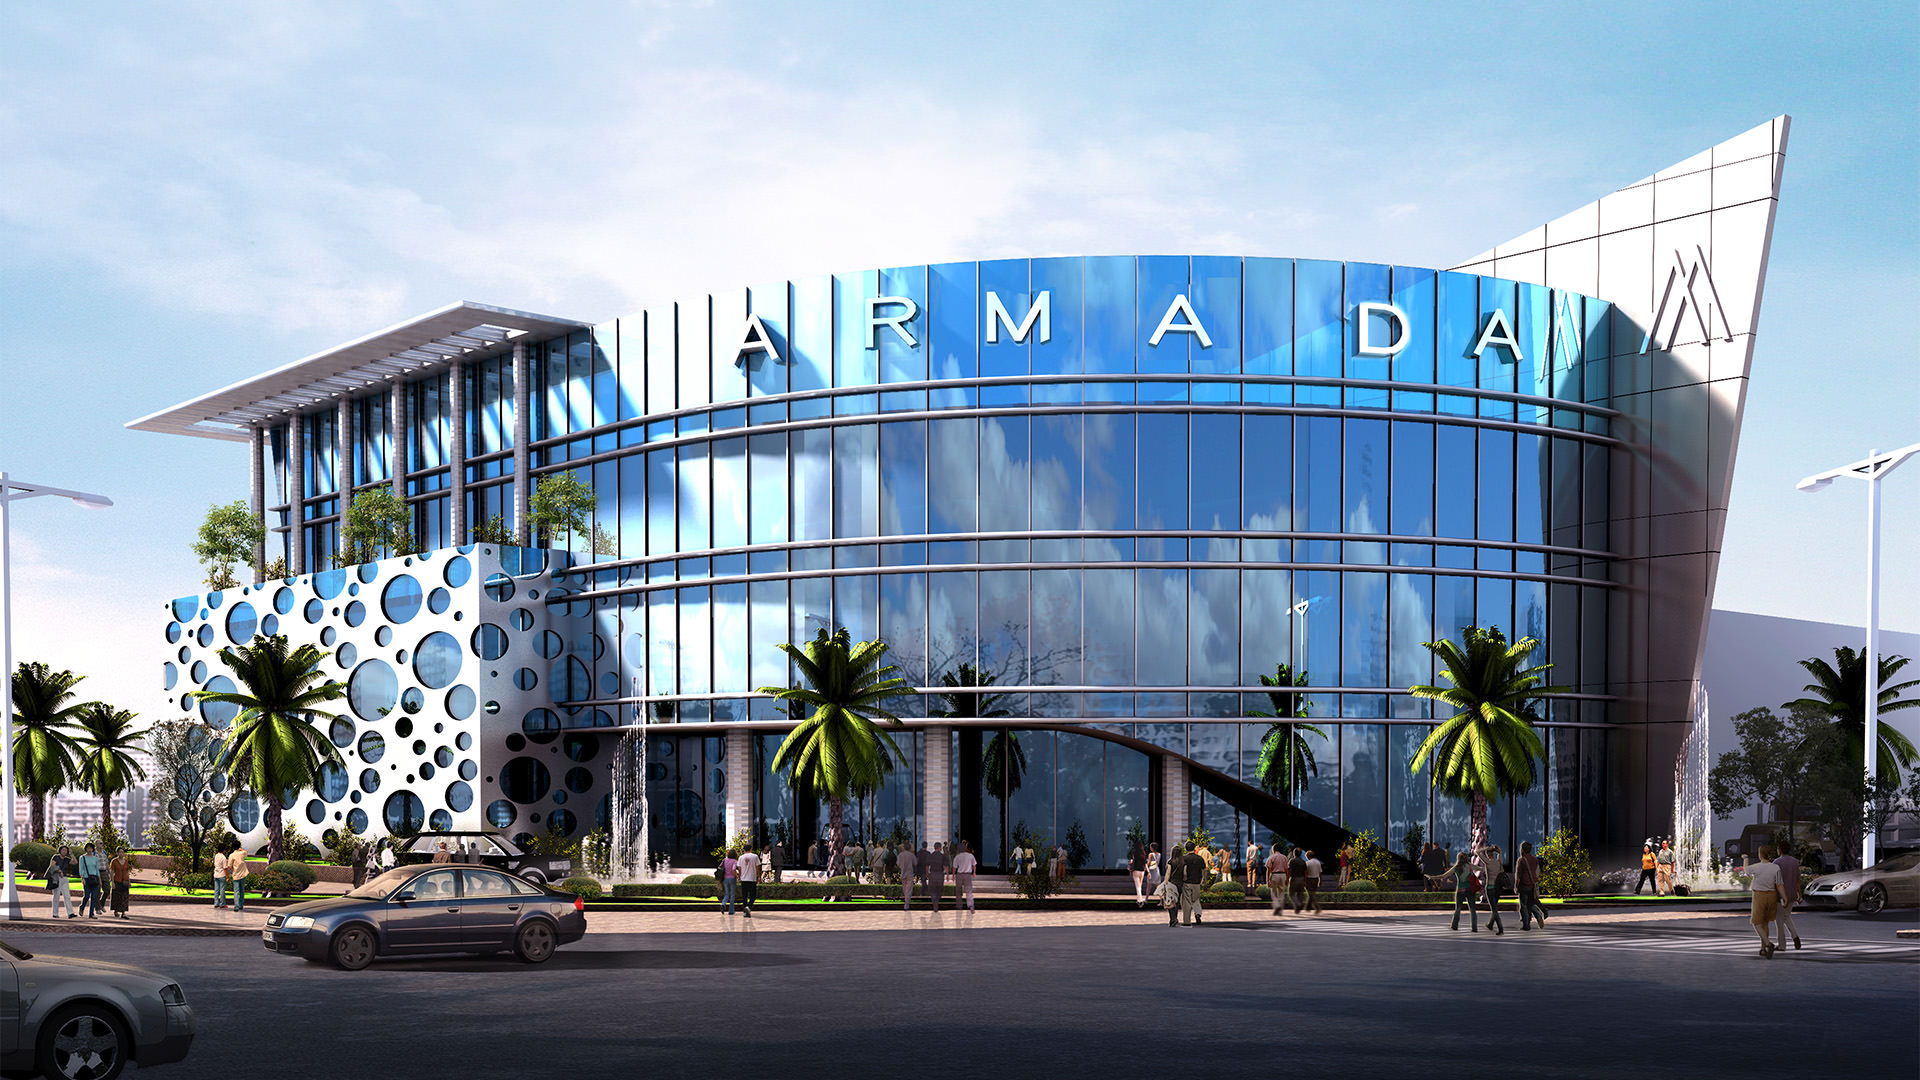 Armada Warehouse by Arab Architects